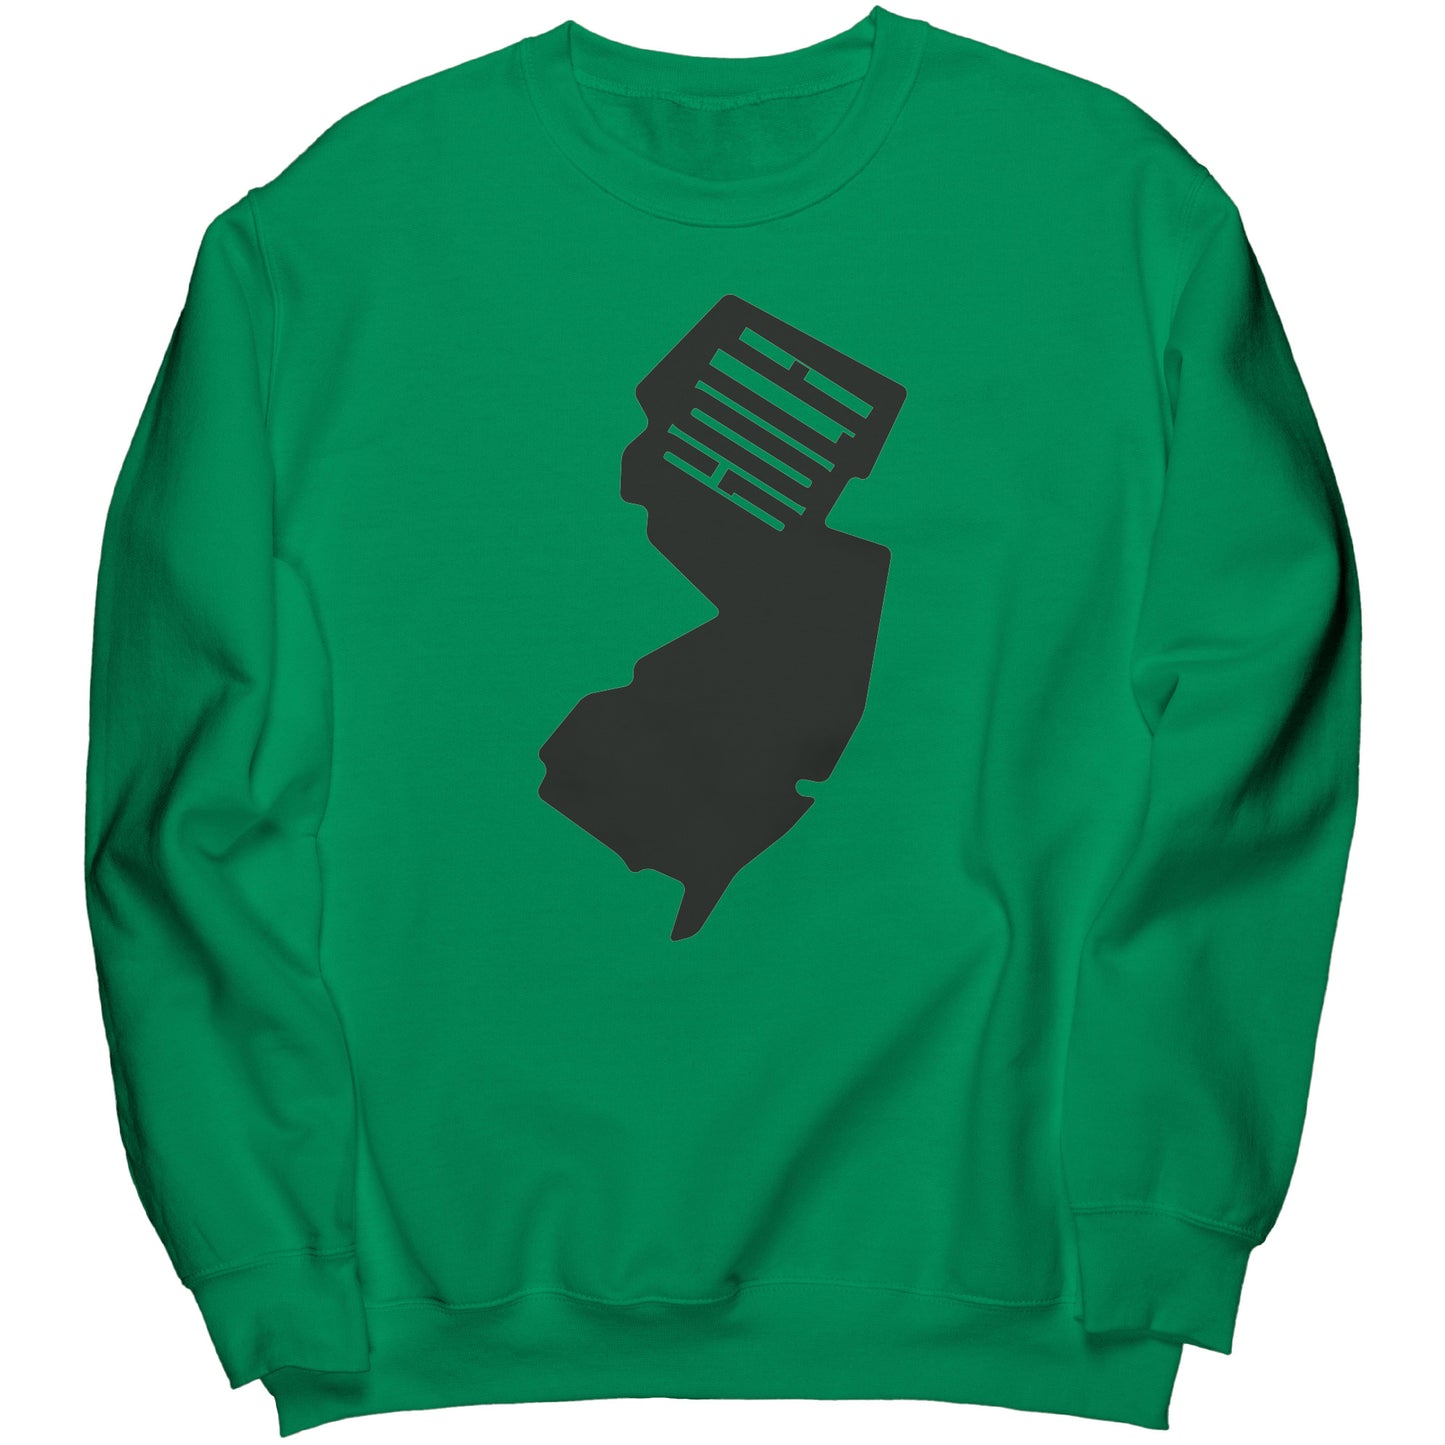 New Jersey "Golf" Sweatshirt